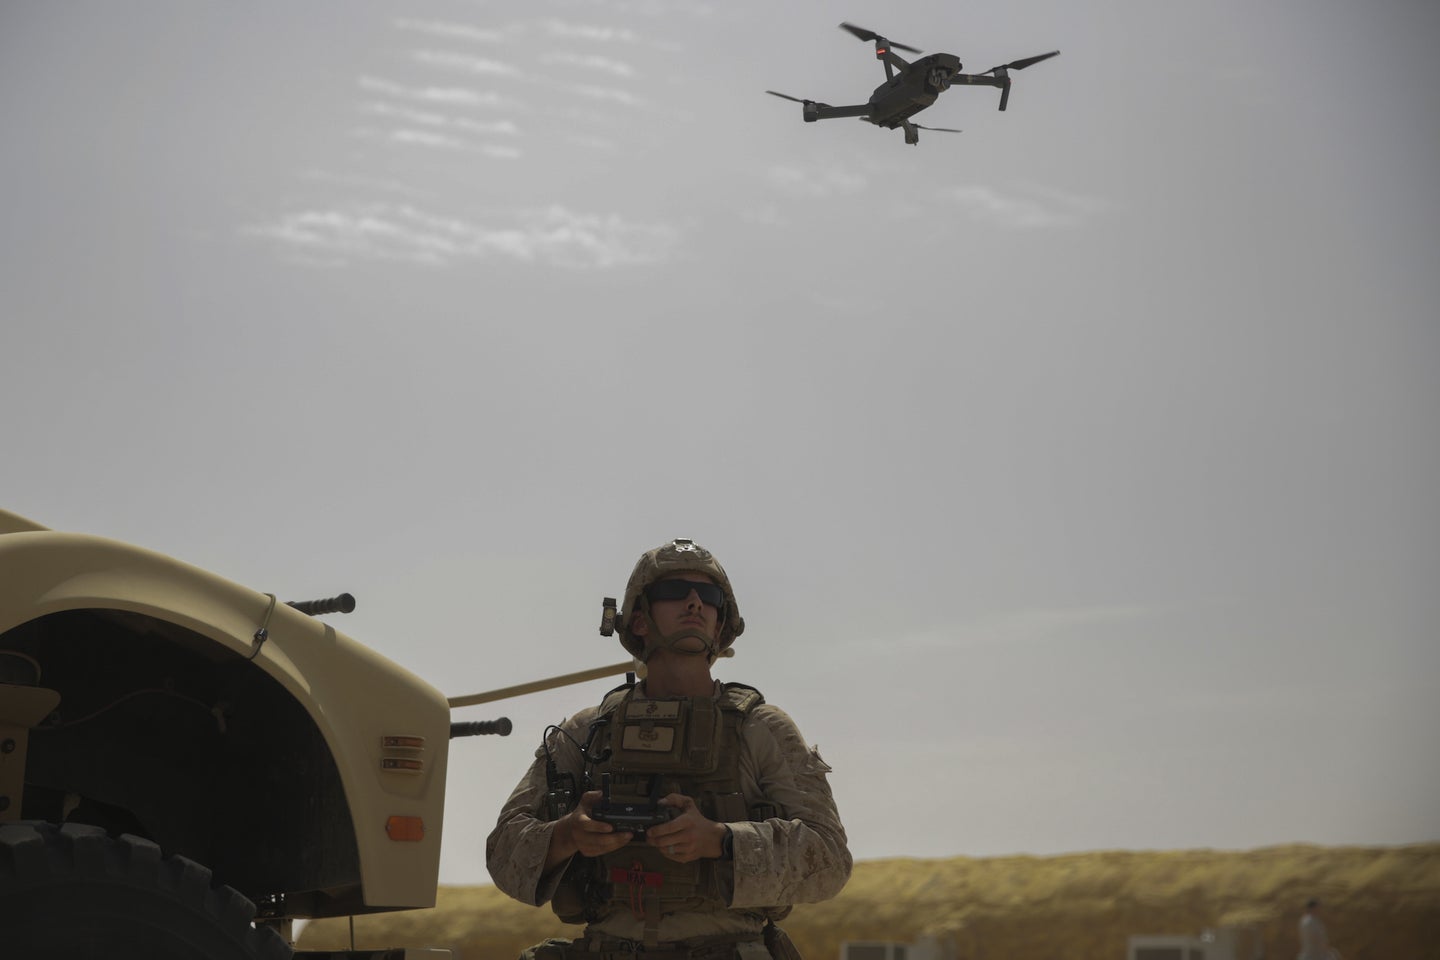 A marine with a DJI Mavic Pro drone in 2017.